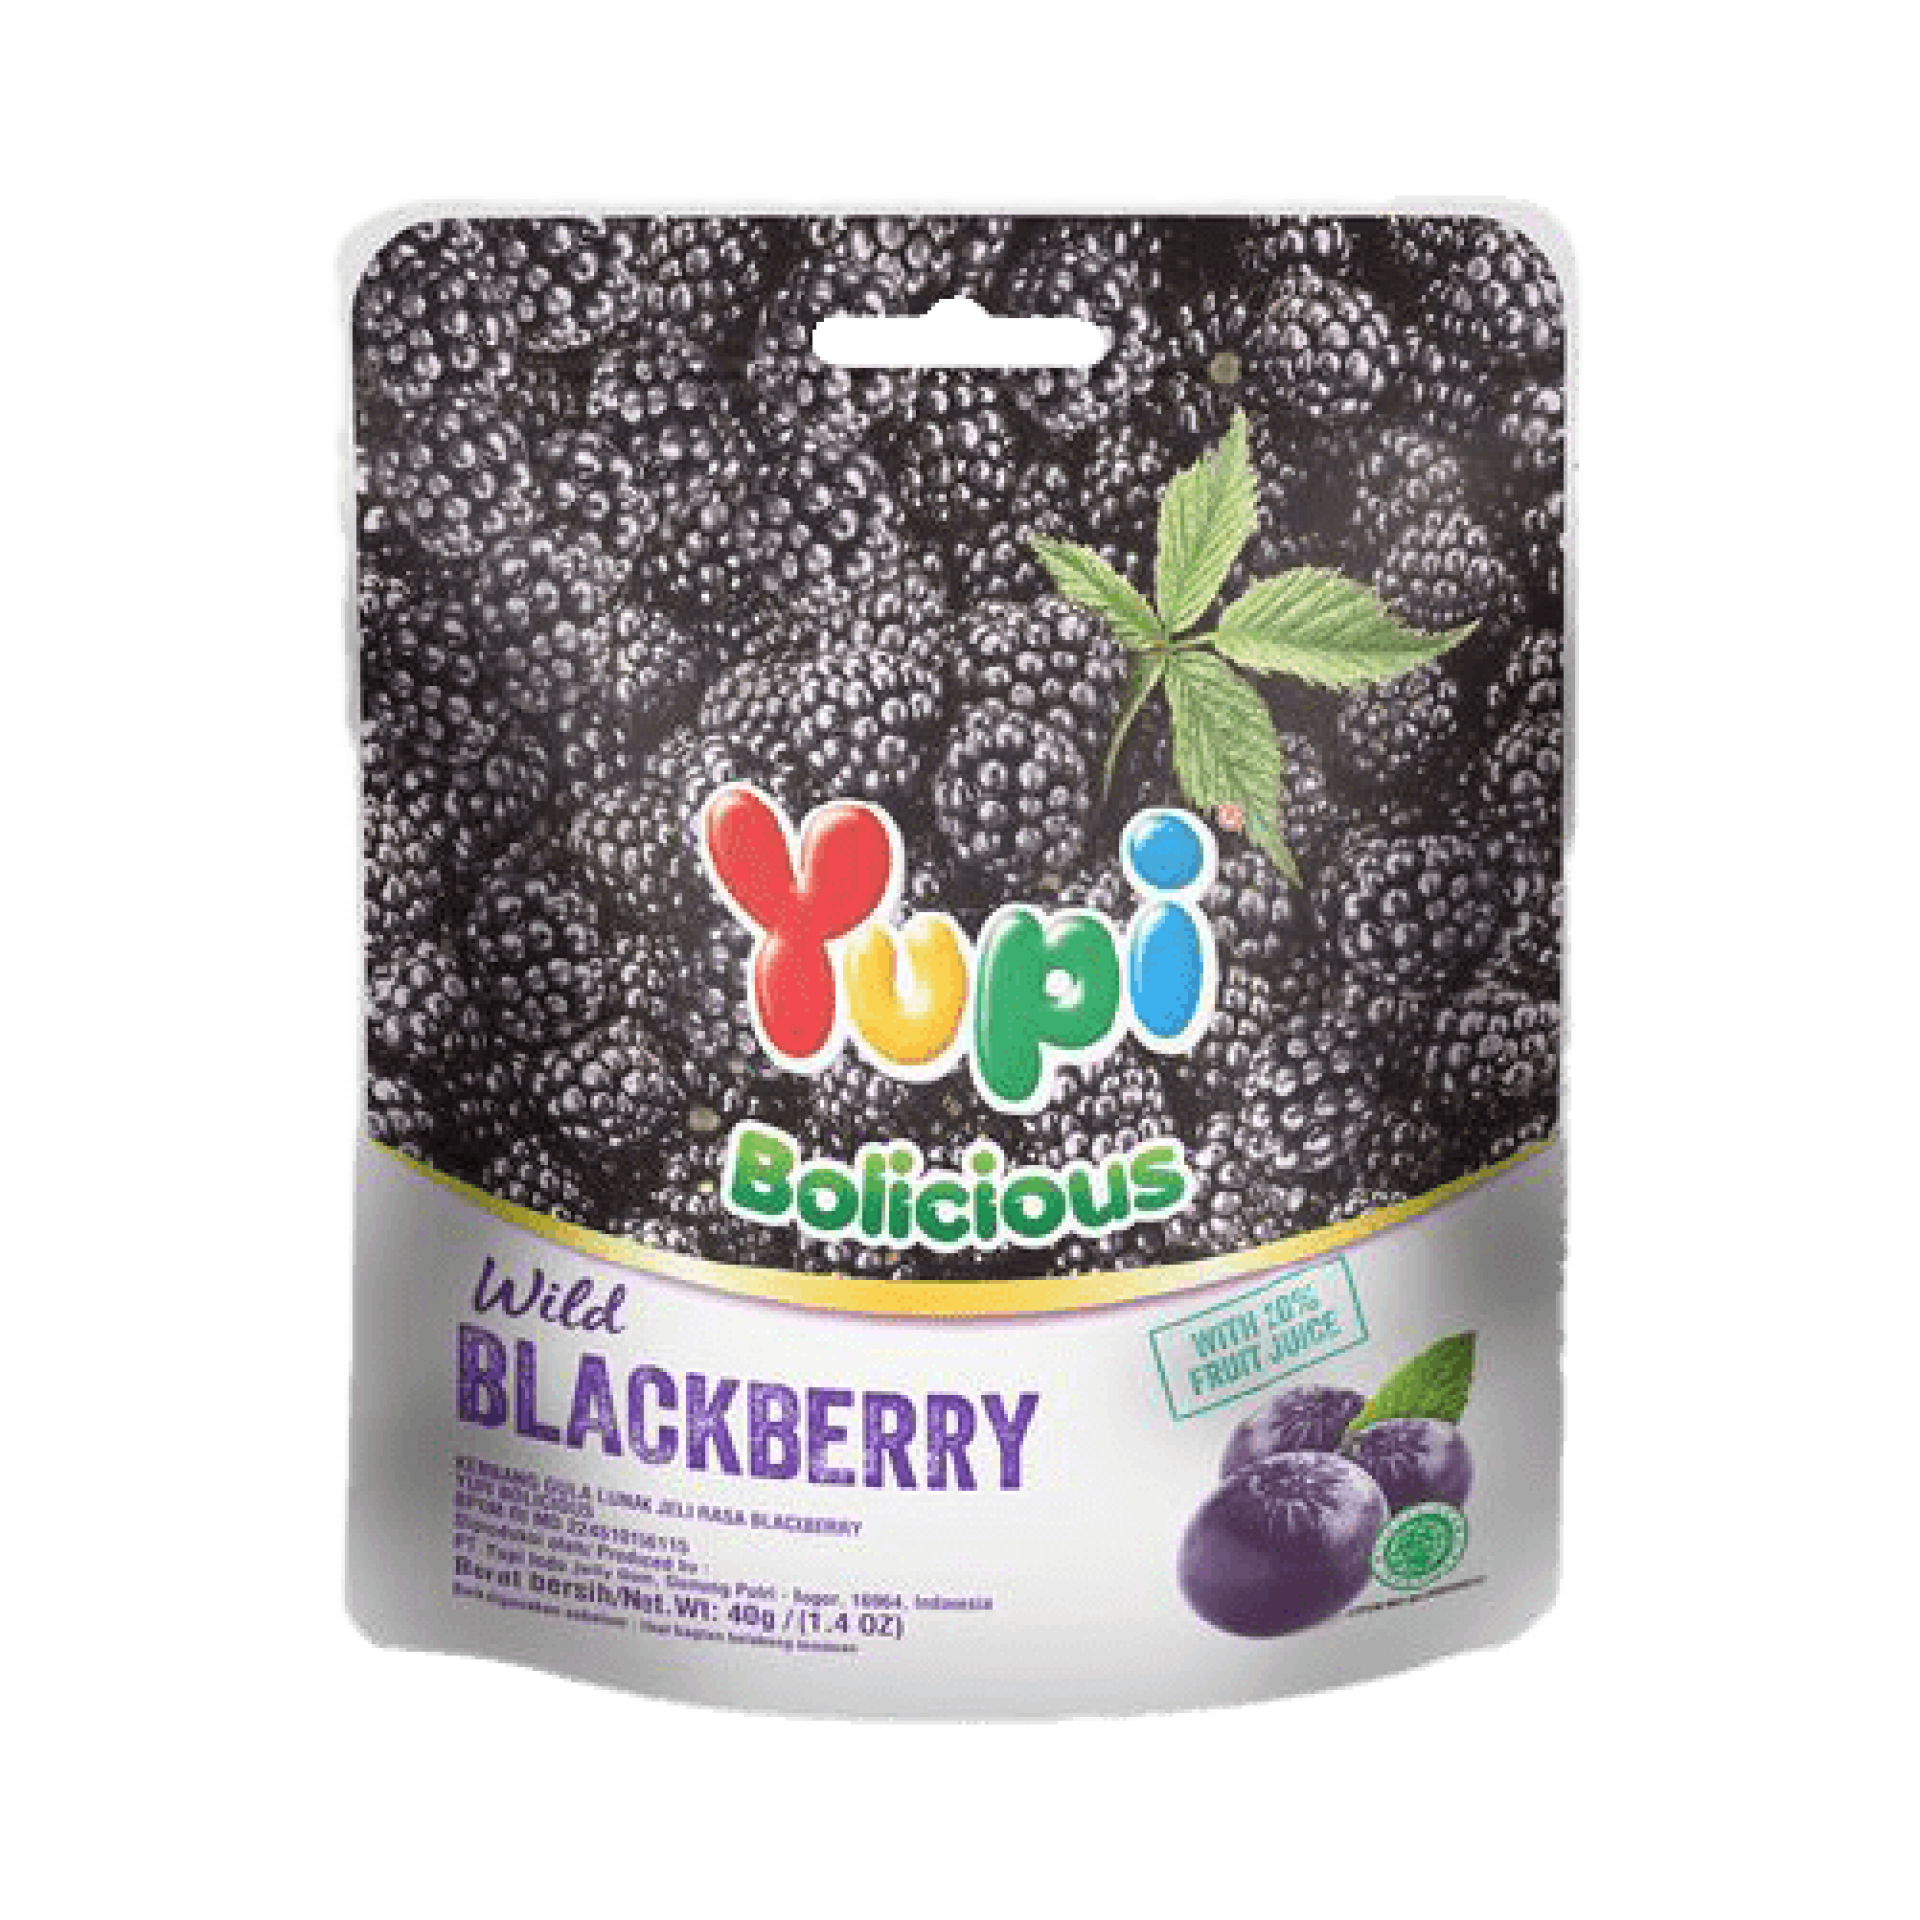 Bolicious blackberry 40 gr-min